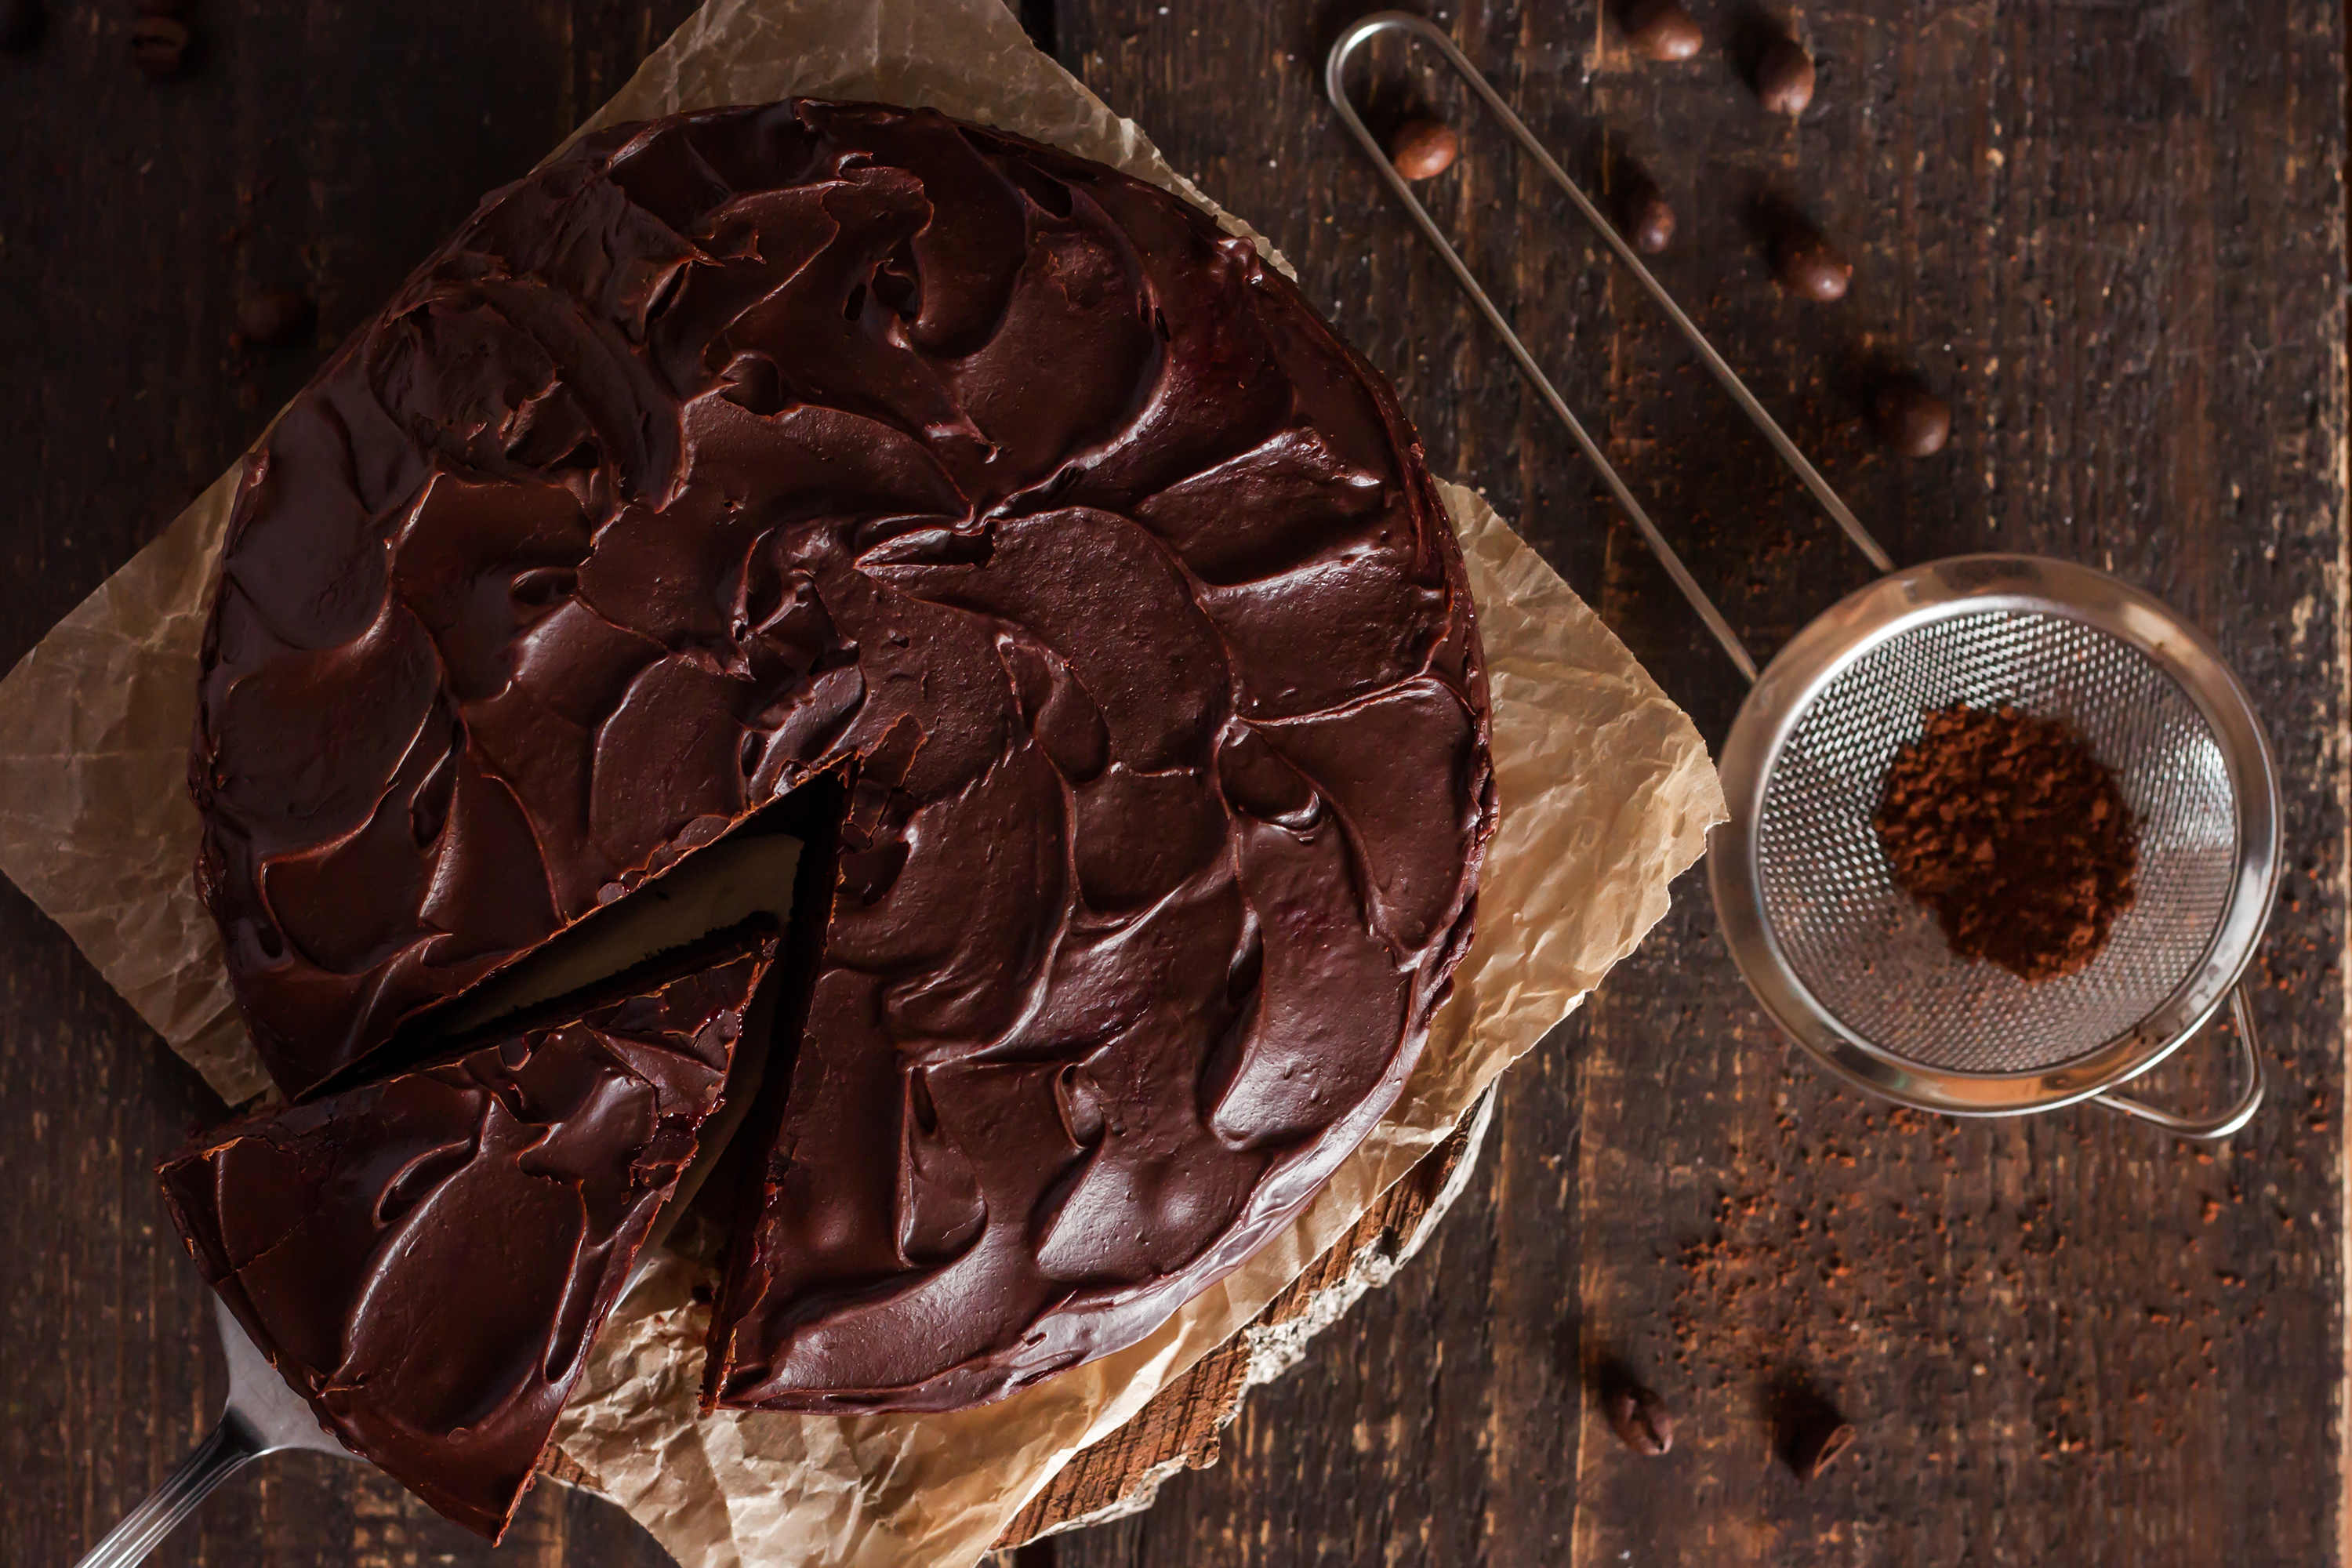 Best Nigella Lawson's Dense Chocolate Cake Recipe - How to Make Chocolate  Loaf Cake